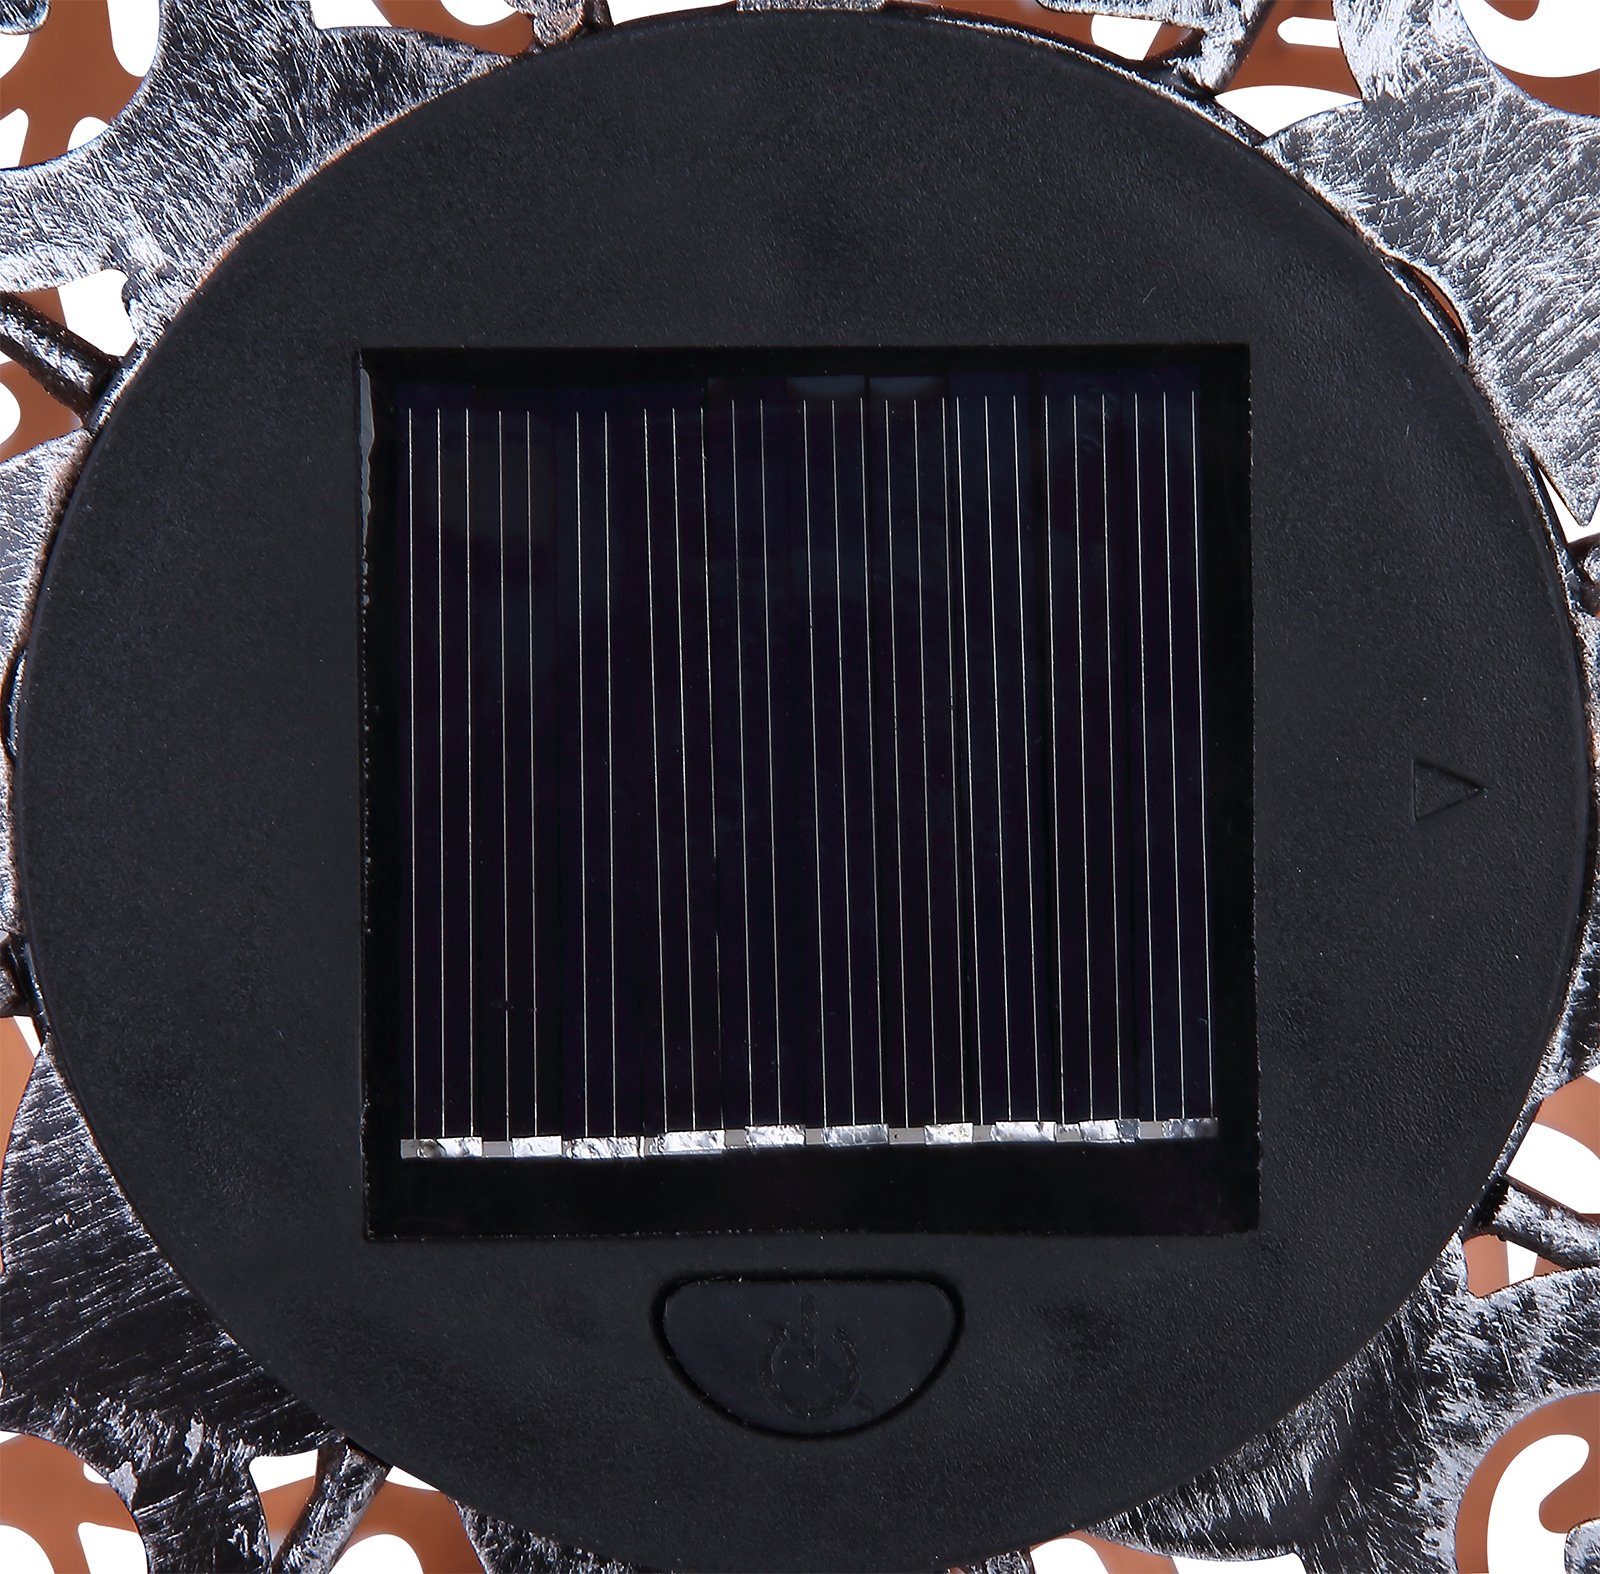 Set Kugel Garten bmf-versand Metall Solarleuchte Außen Solarlampe Antik Solarleuchte LED 2er